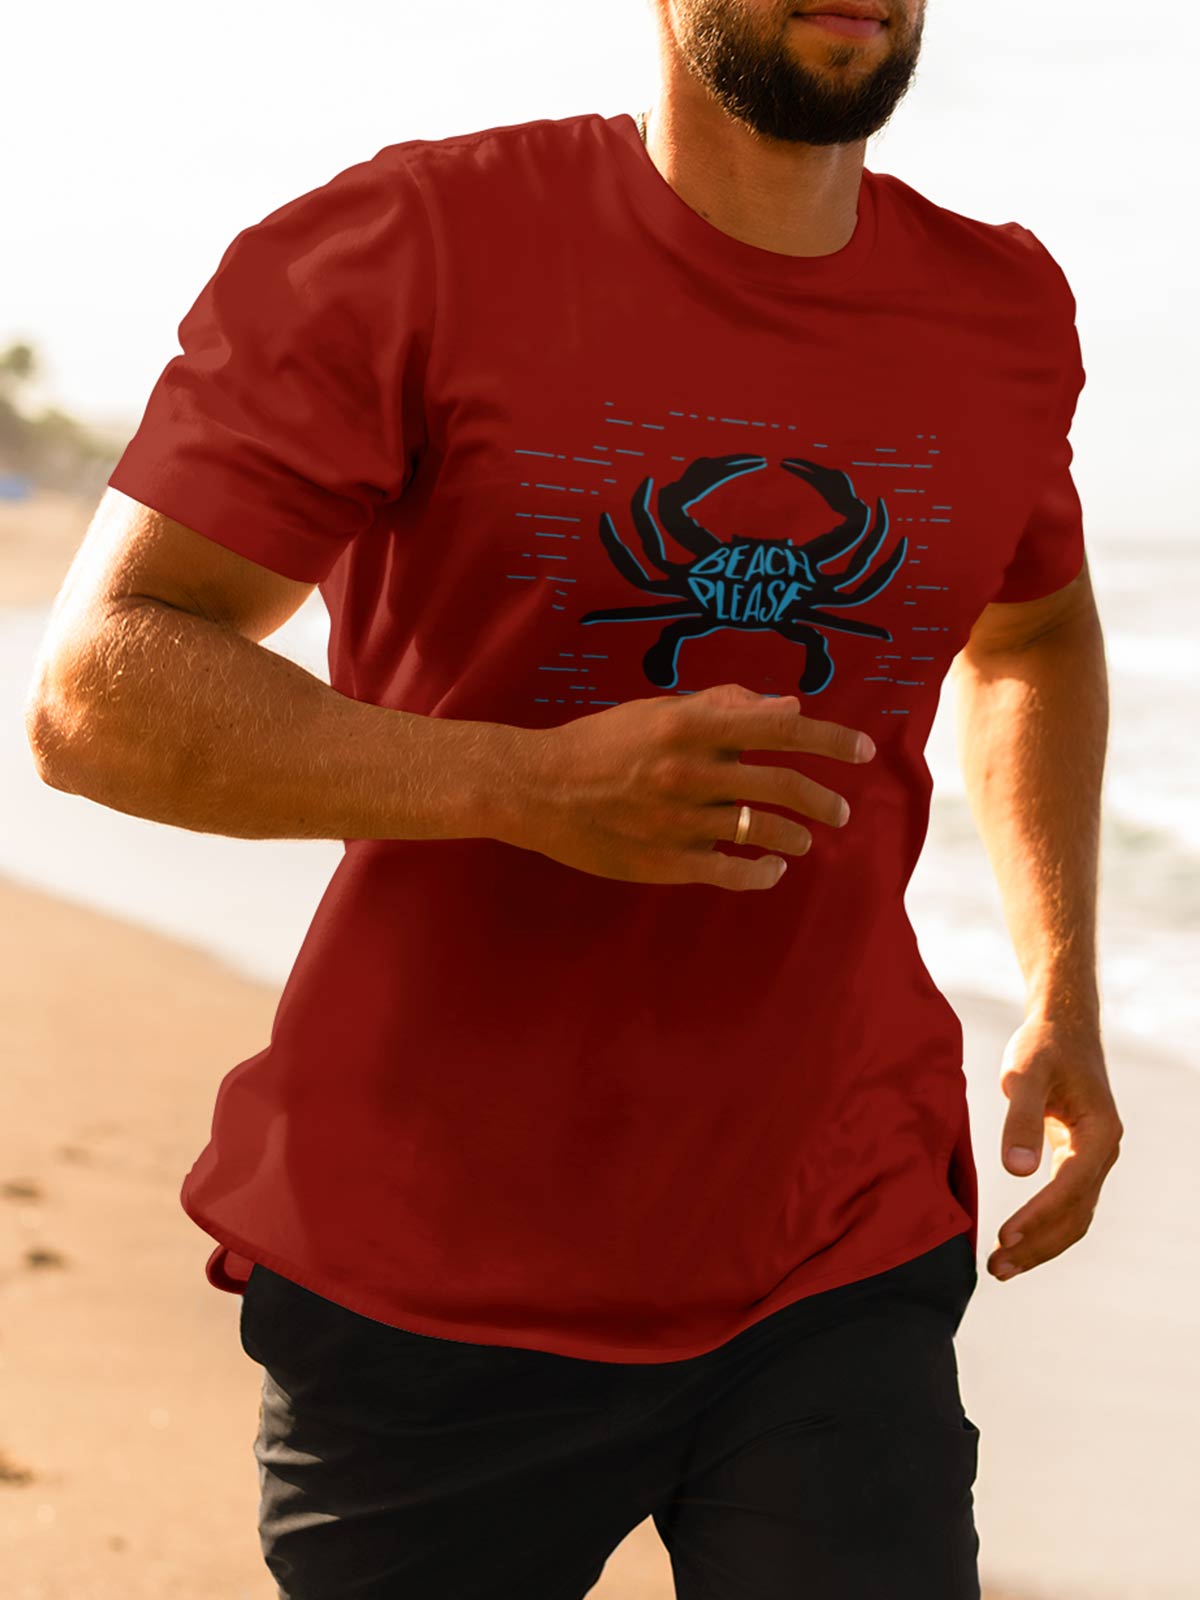 Beach-please-printed-t-shirt-for-men by Ghumakkad